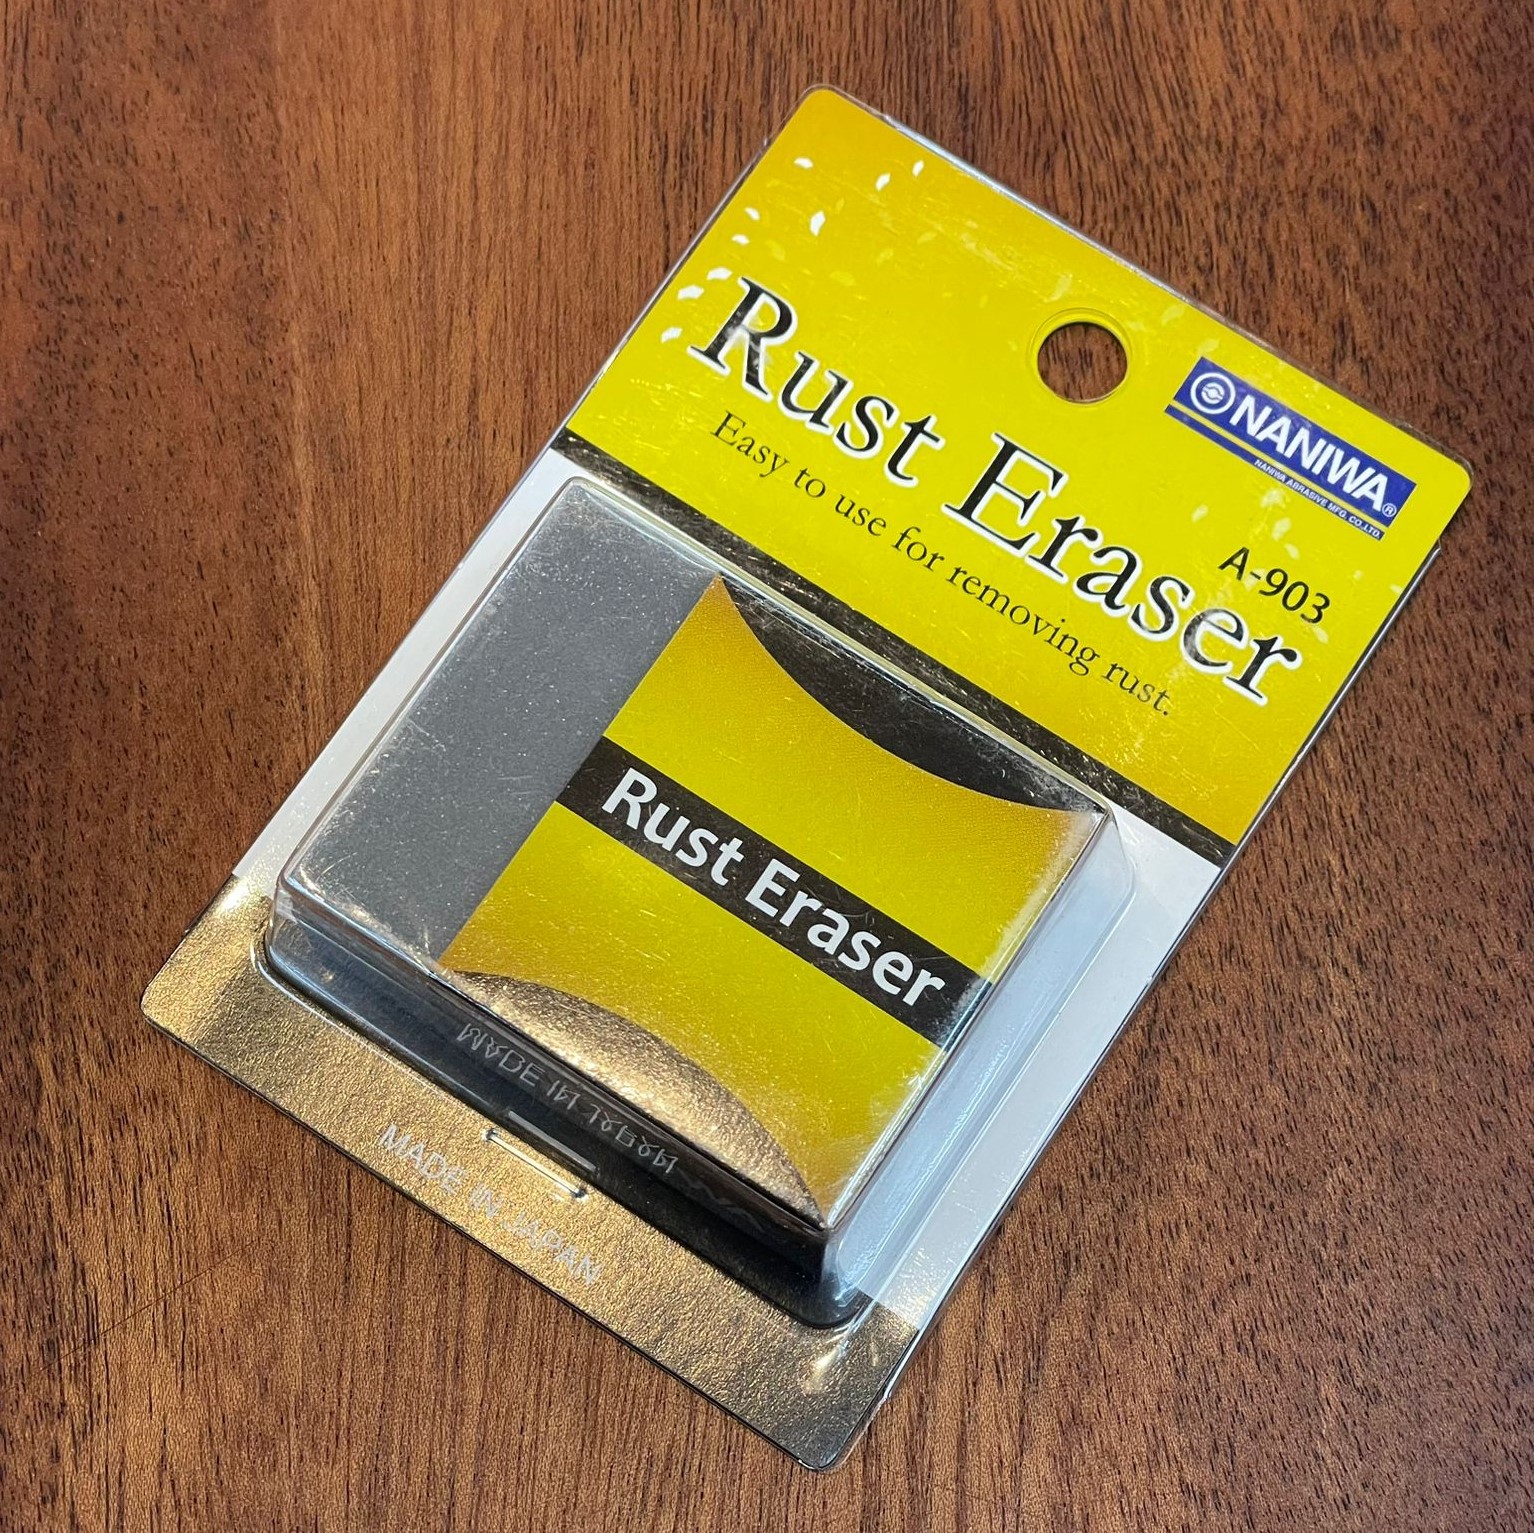 Rust Remover / Rust Eraser - Naniwa - Shop online